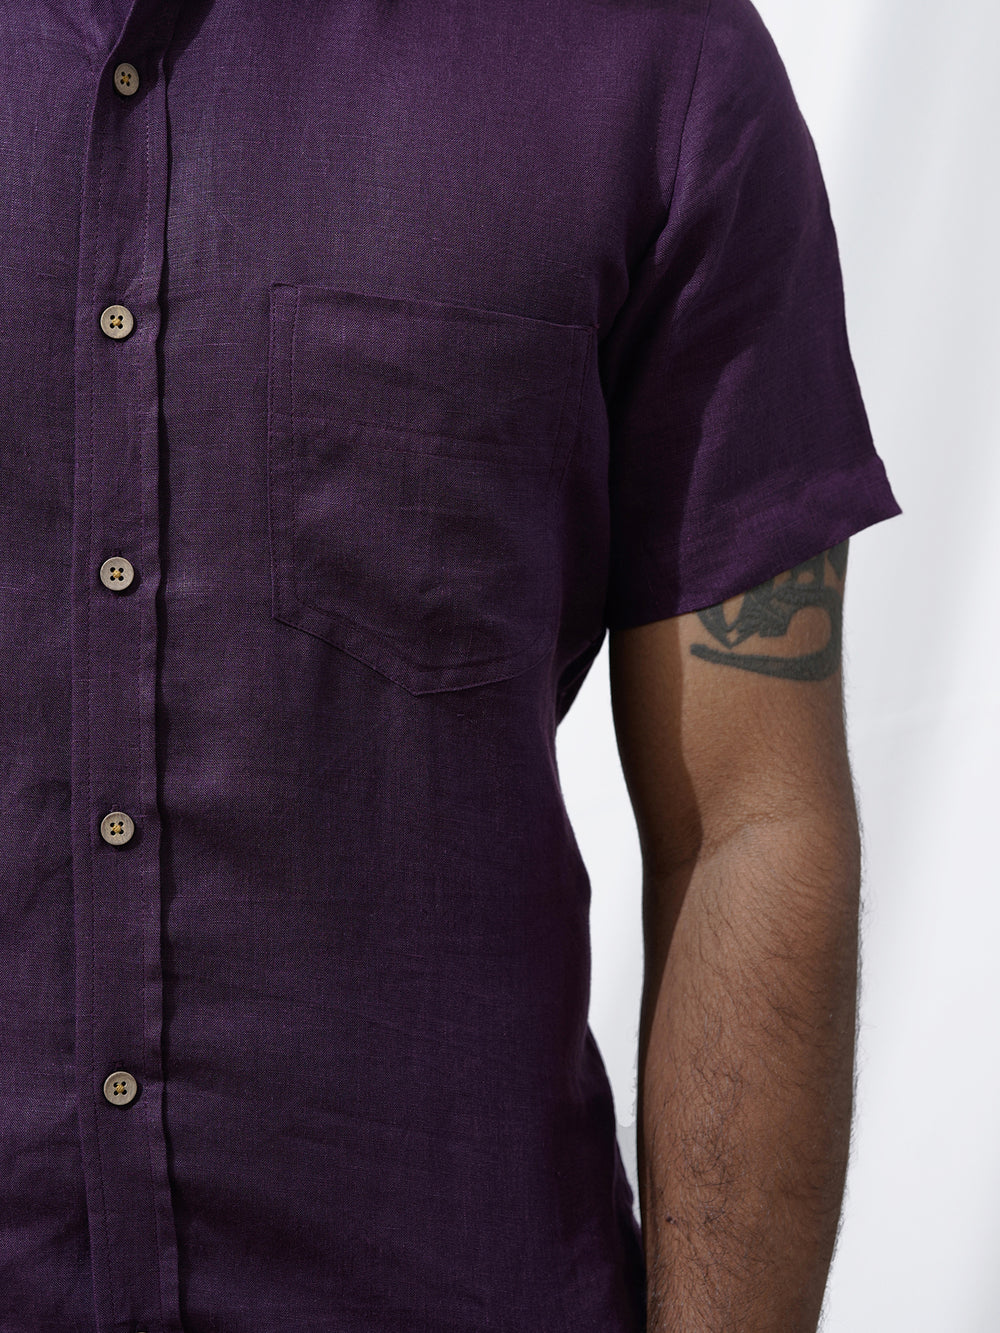 Henry - Pure Linen Half Sleeve Shirt - Purple